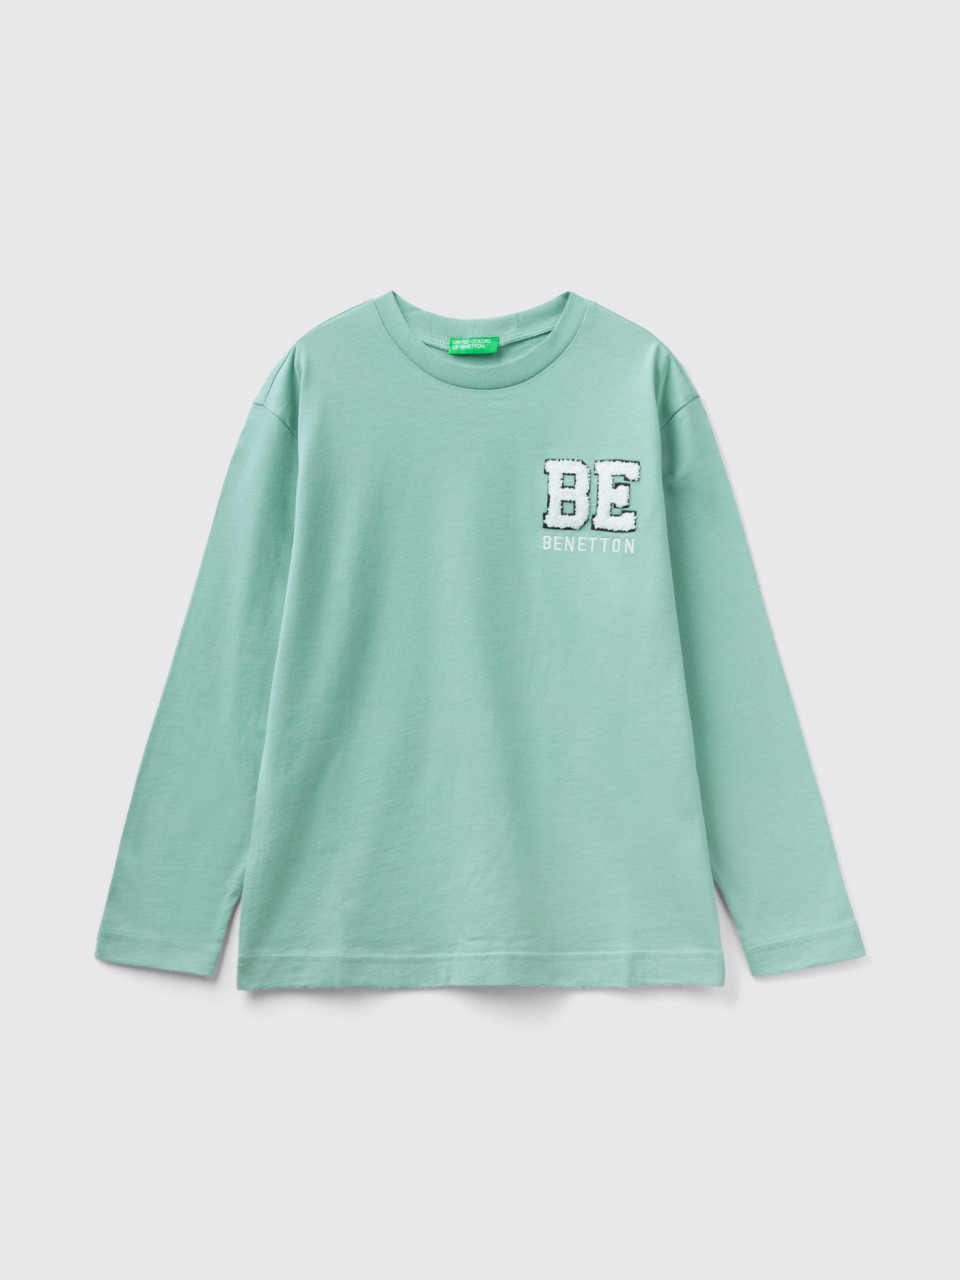 Benetton, T-shirt Chaud En 100 % Coton Bio, Bleu Vert, Enfants